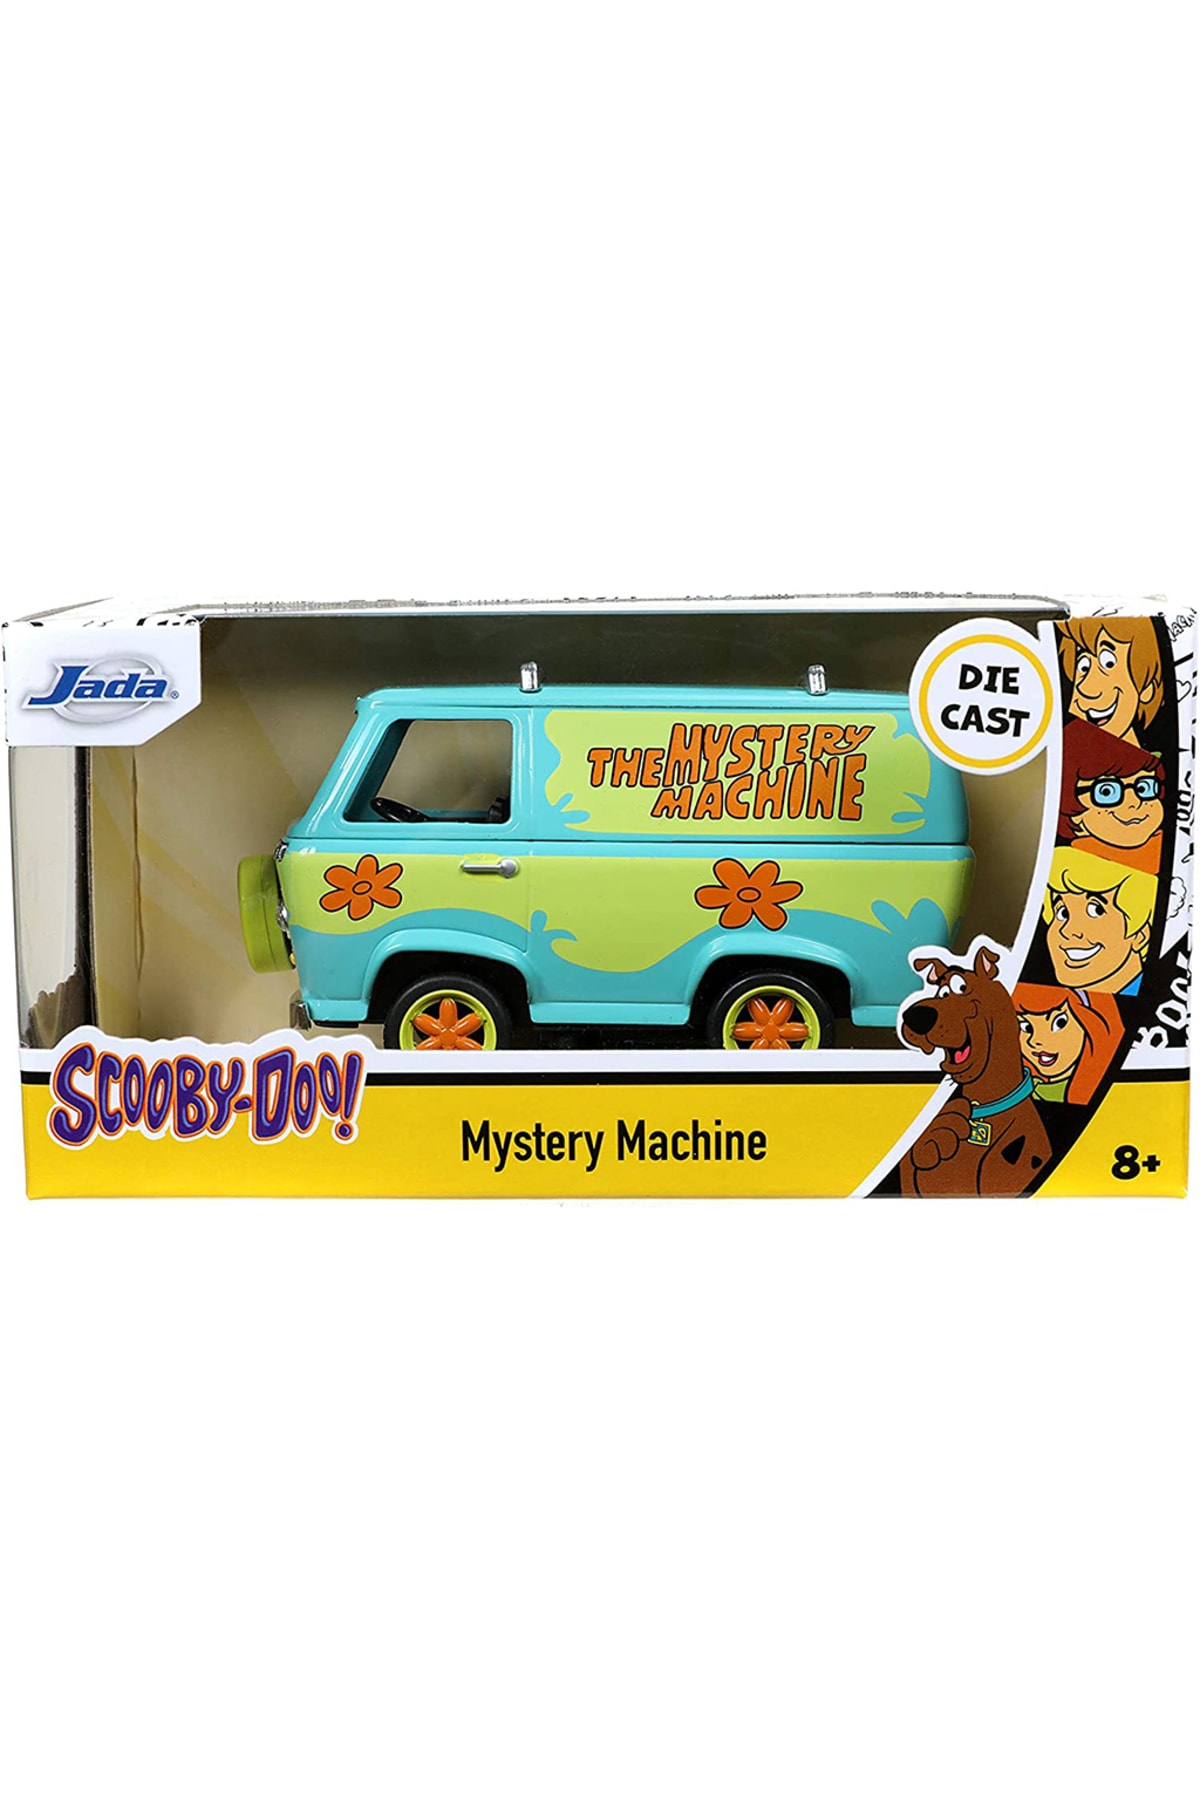 Scooby Doo Mystery Machine Die Cast 1:32 Scale